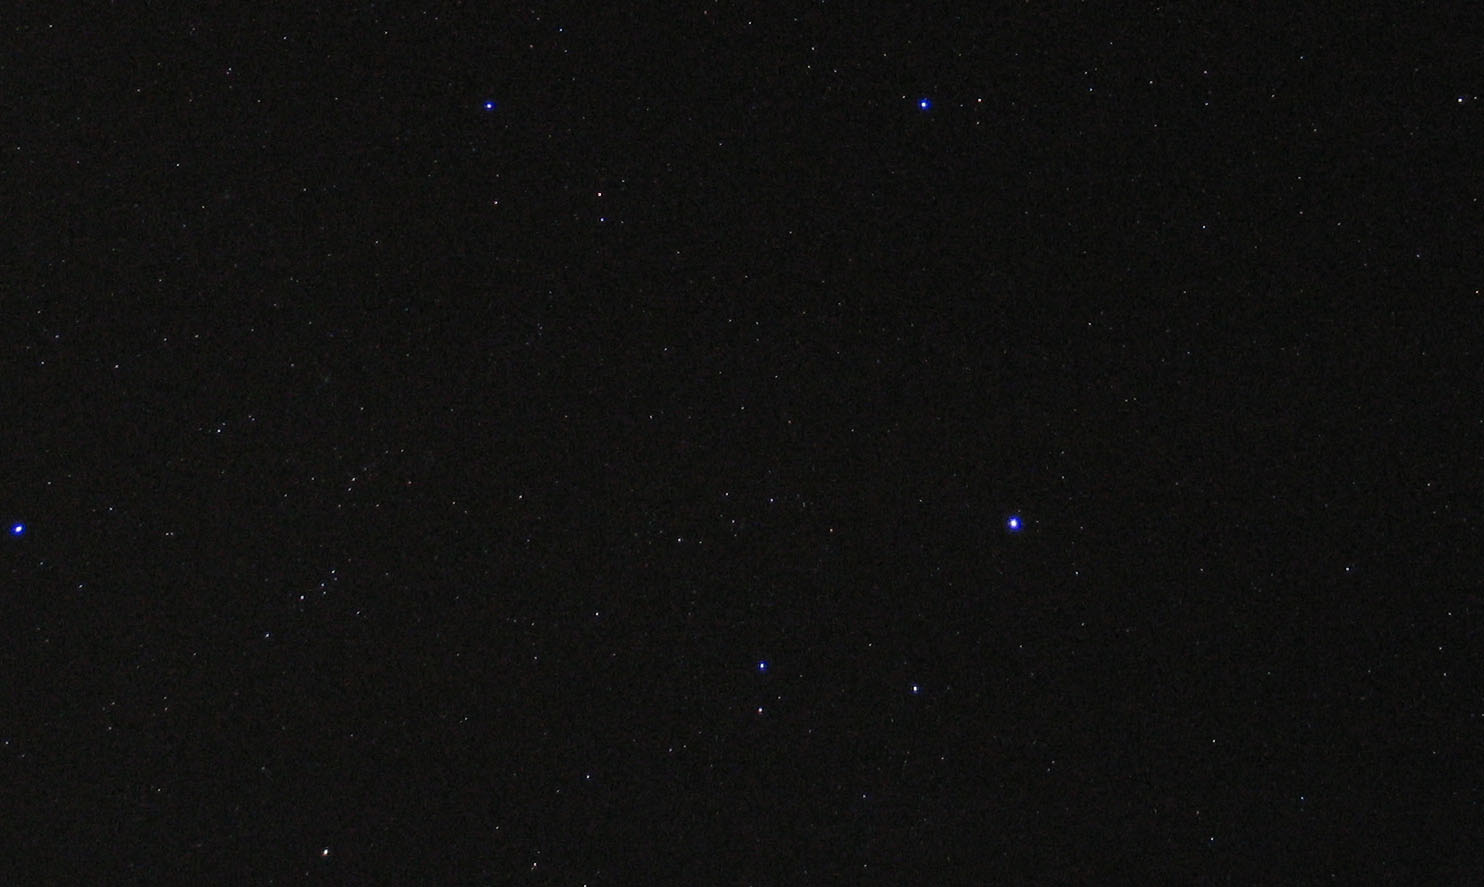 Constellation du Cocher - Auriga (The Charioteer) 